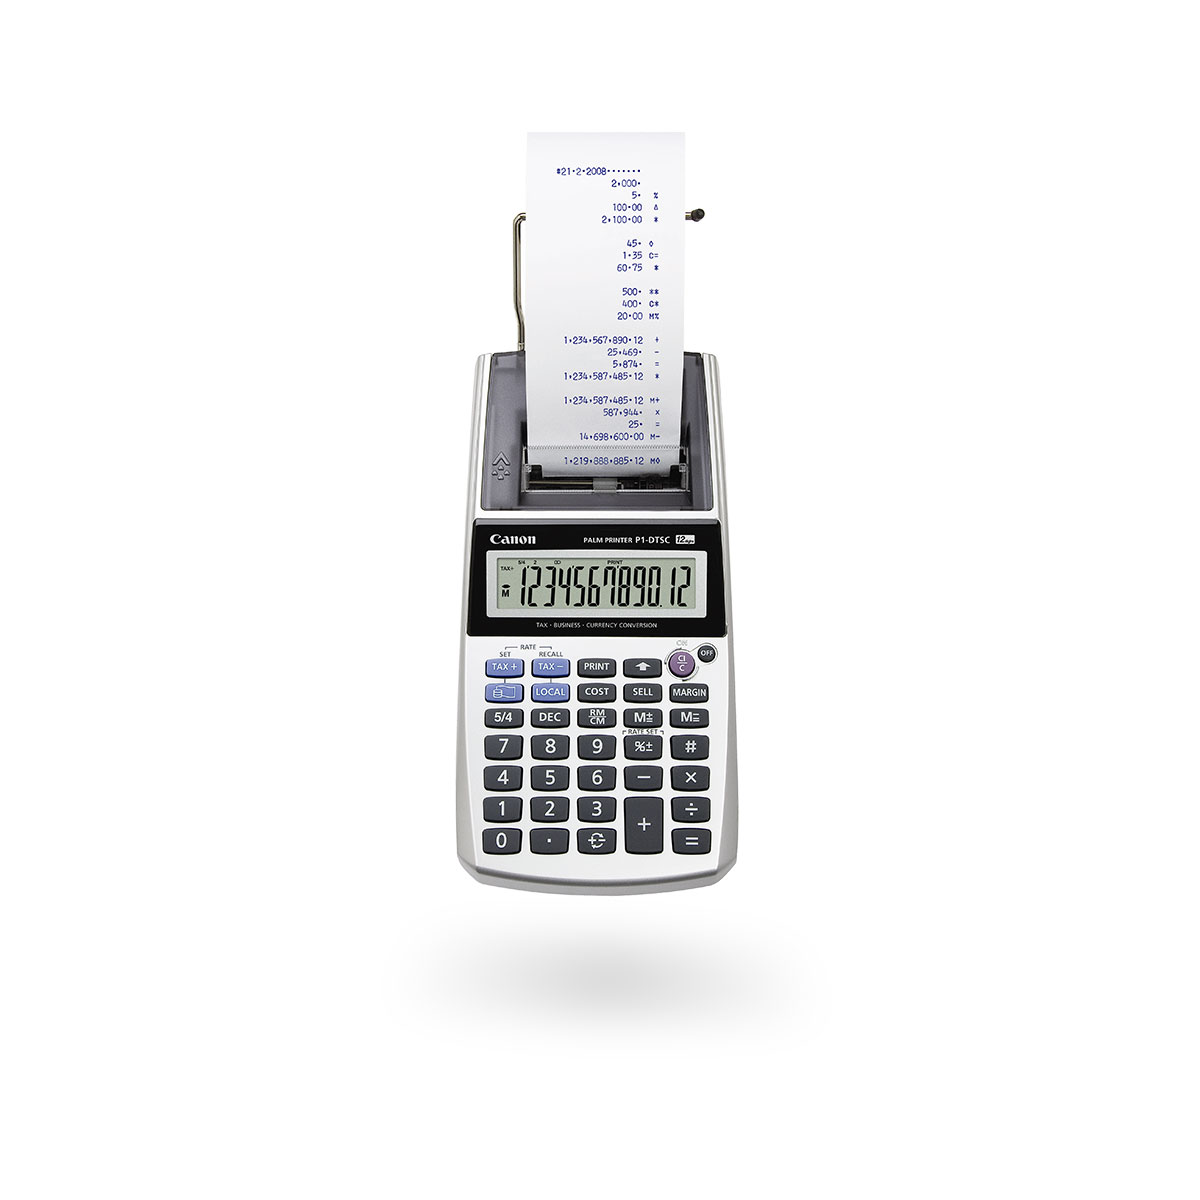 dts travel calculator